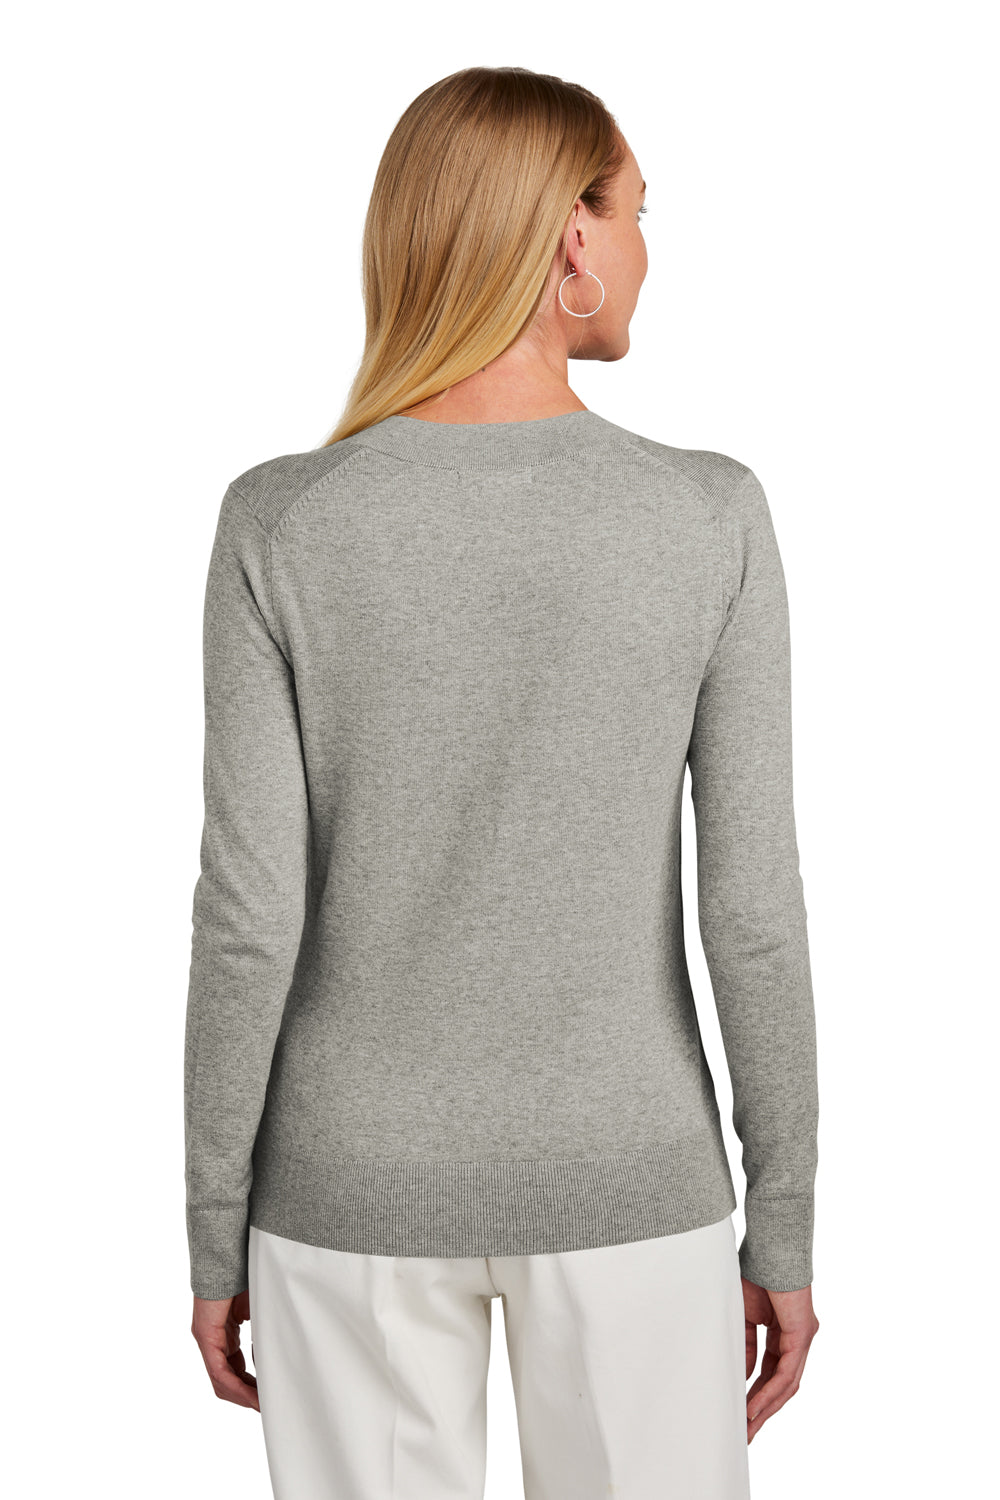 Brooks Brothers Womens Long Sleeve V-Neck Sweater Heather Light Shadow Grey Model Back